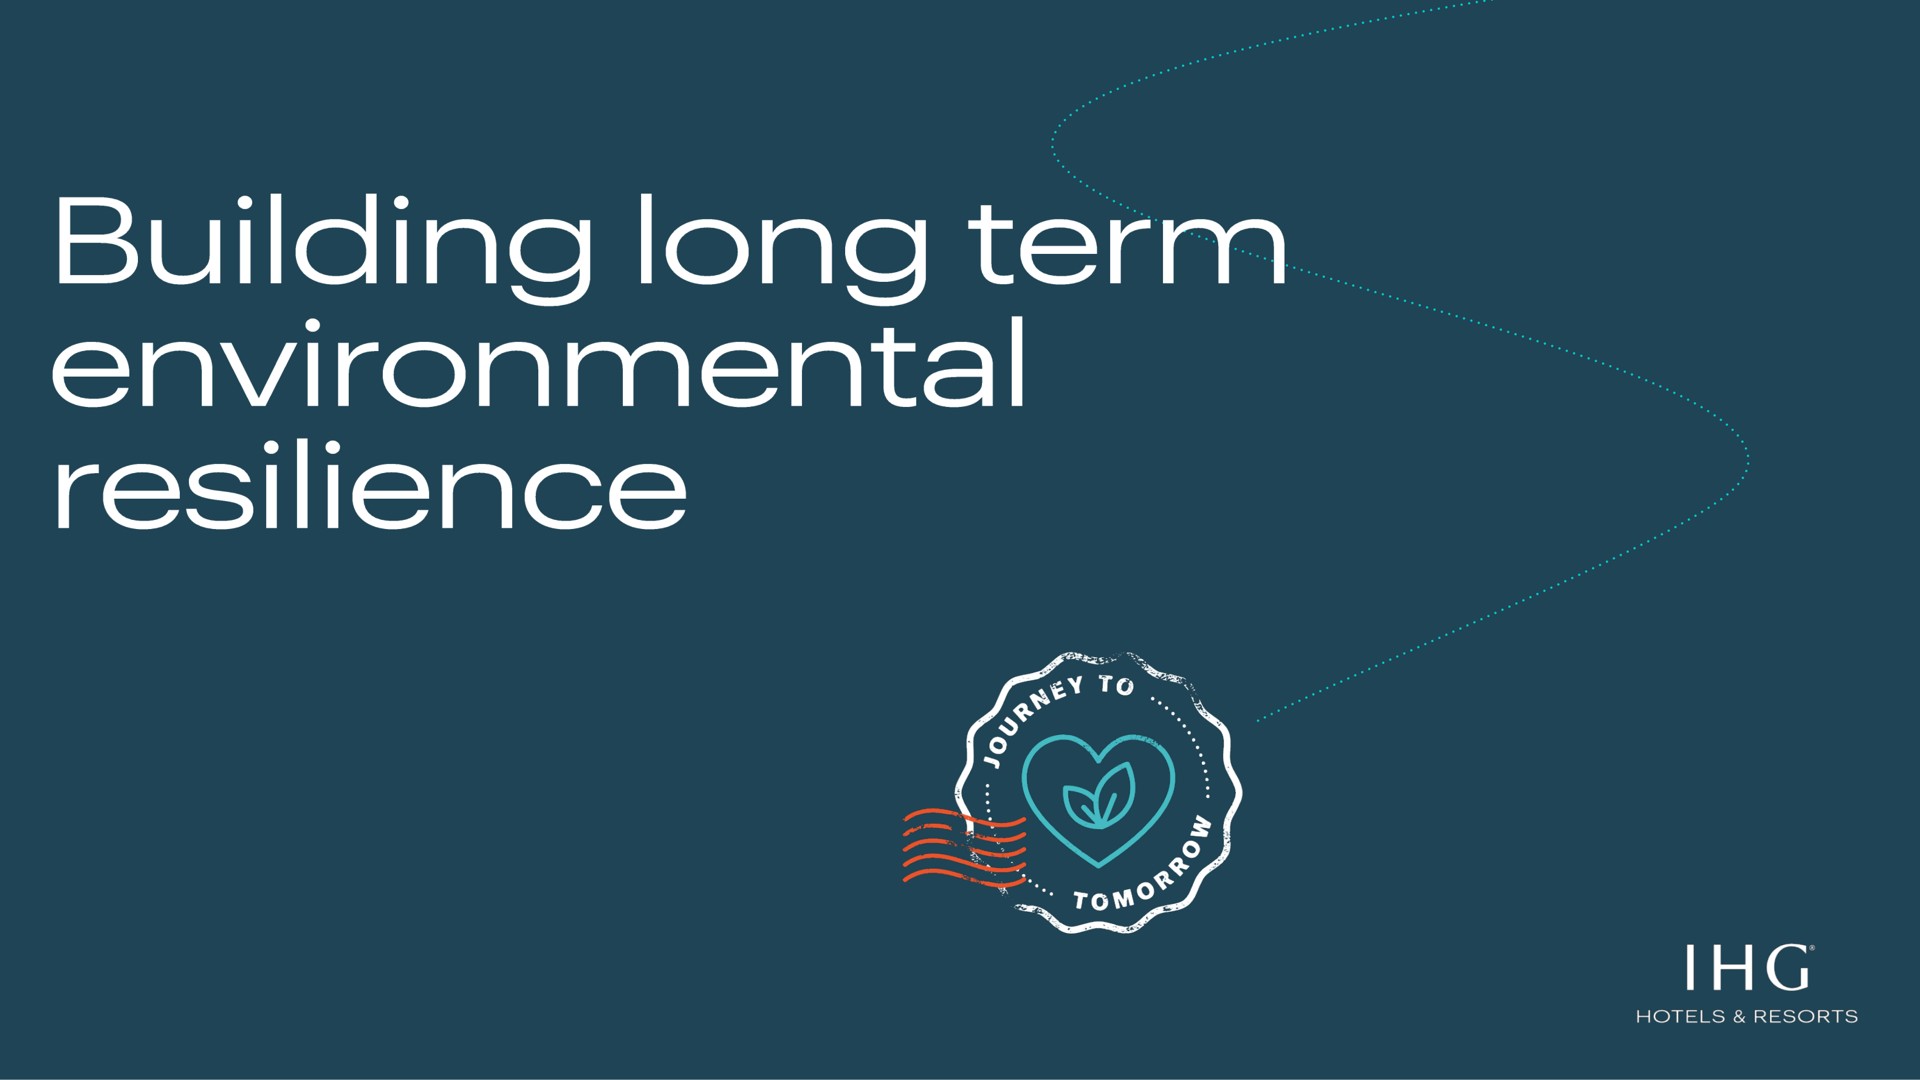 building long term environmental resilience | IHG Hotels